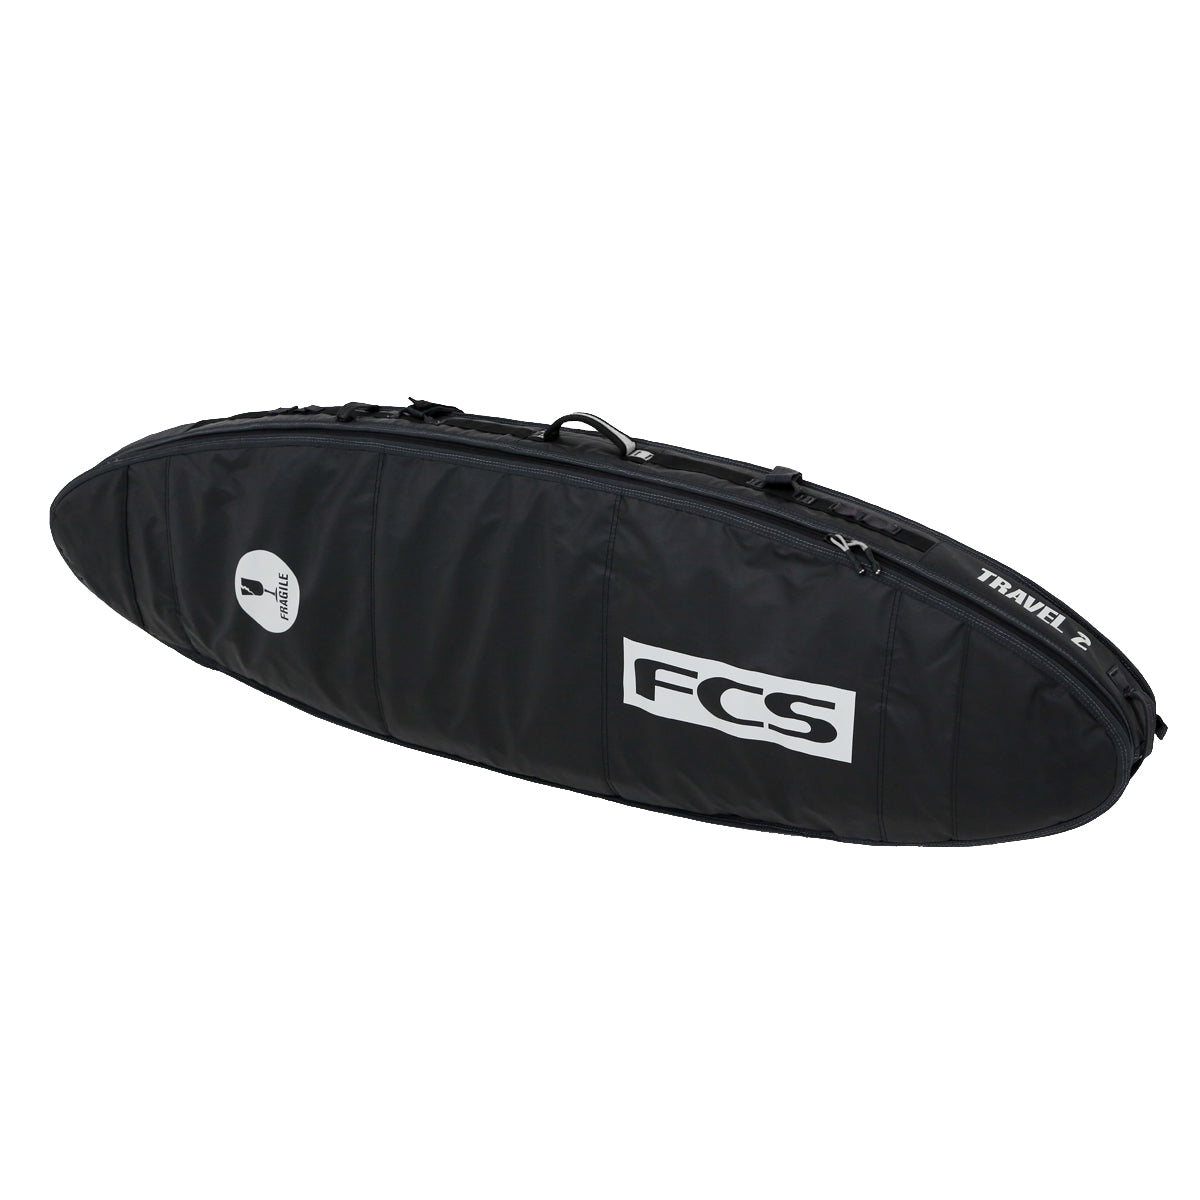 FCS Travel 2 All Purpose Boardbag Black-Grey-22 6ft7in